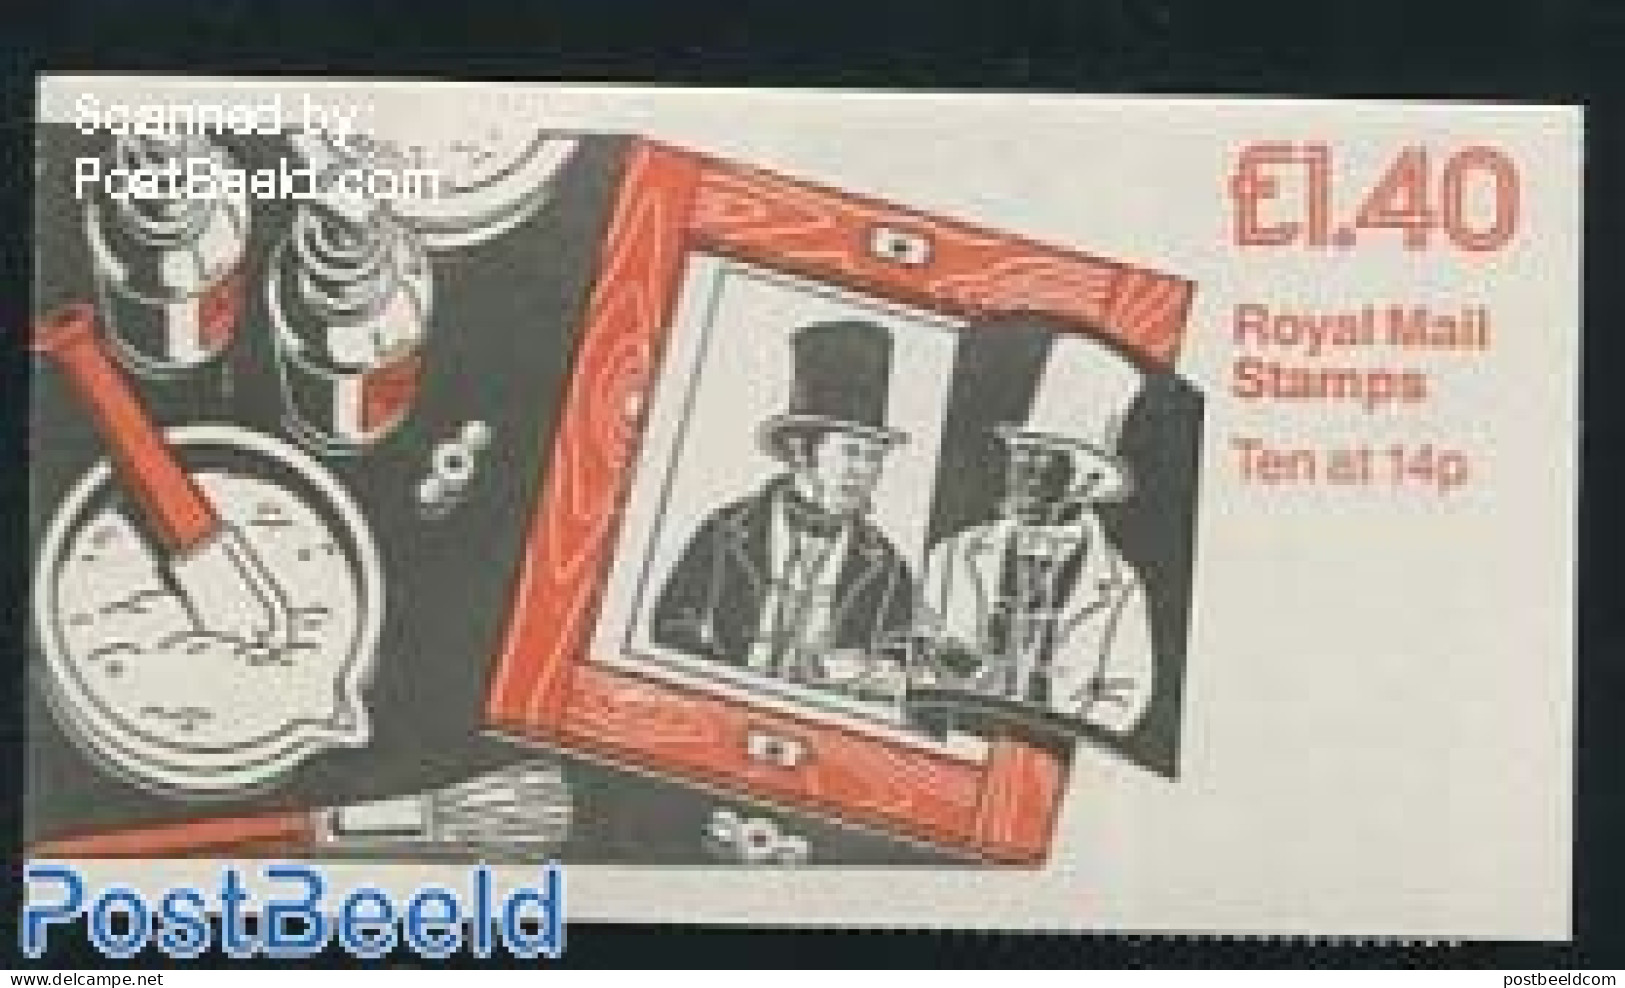 Great Britain 1989 Definitives Booklet, William Henry Fox Talbot, Selvedge At Left, Mint NH - Ongebruikt